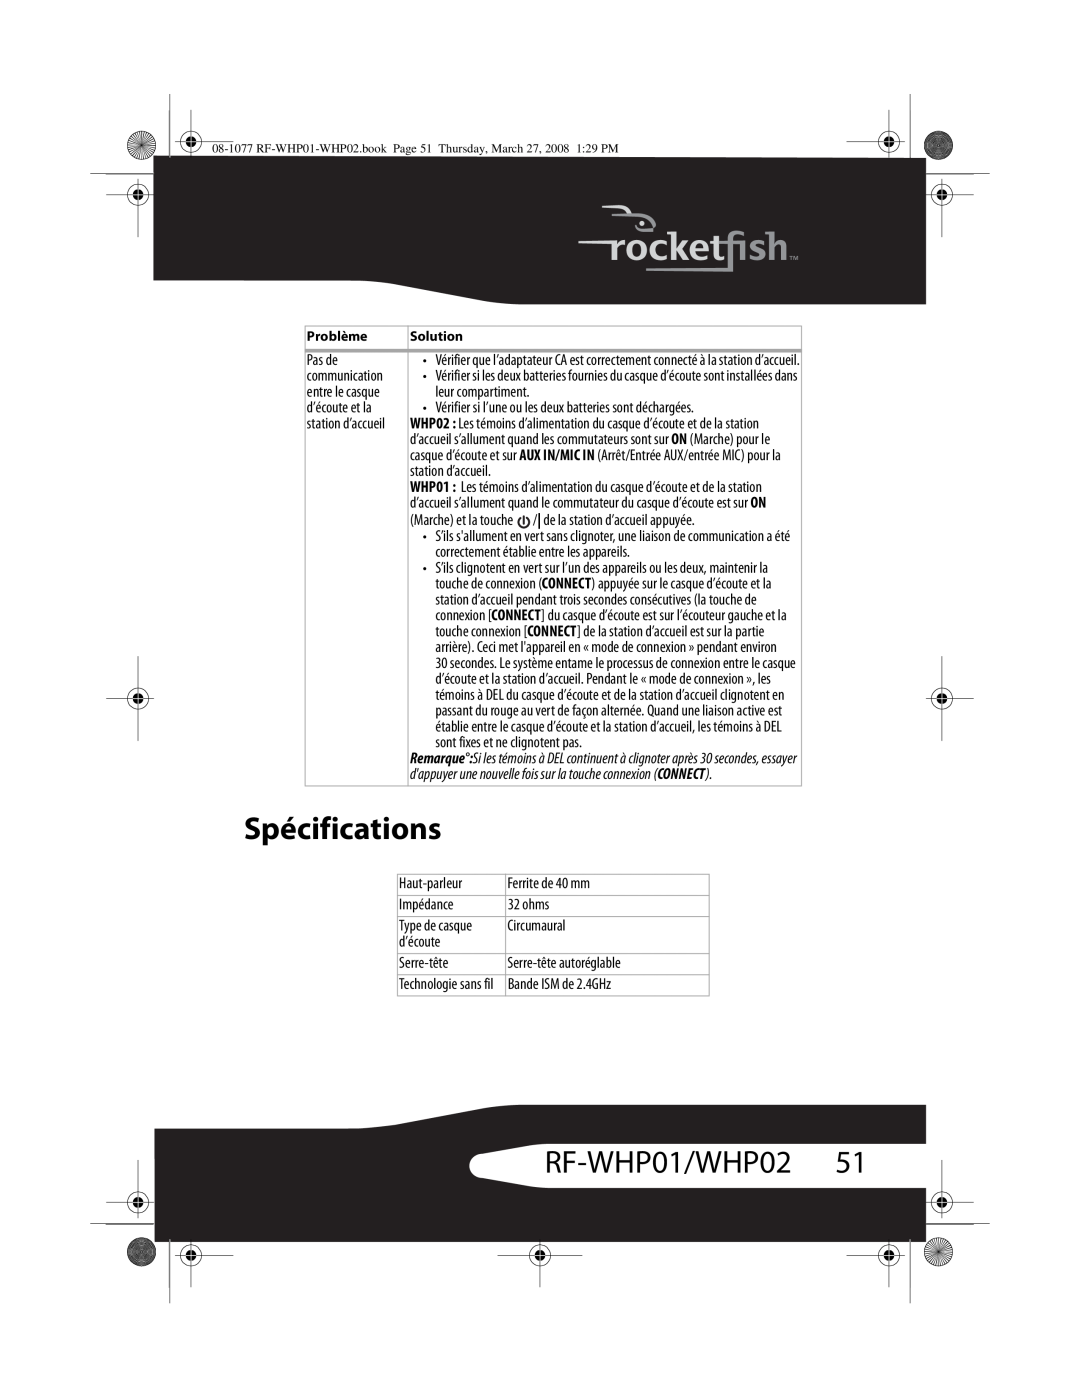 RocketFish RF-WHP02 manual Spécifications, RF-WHP01/WHP0251 